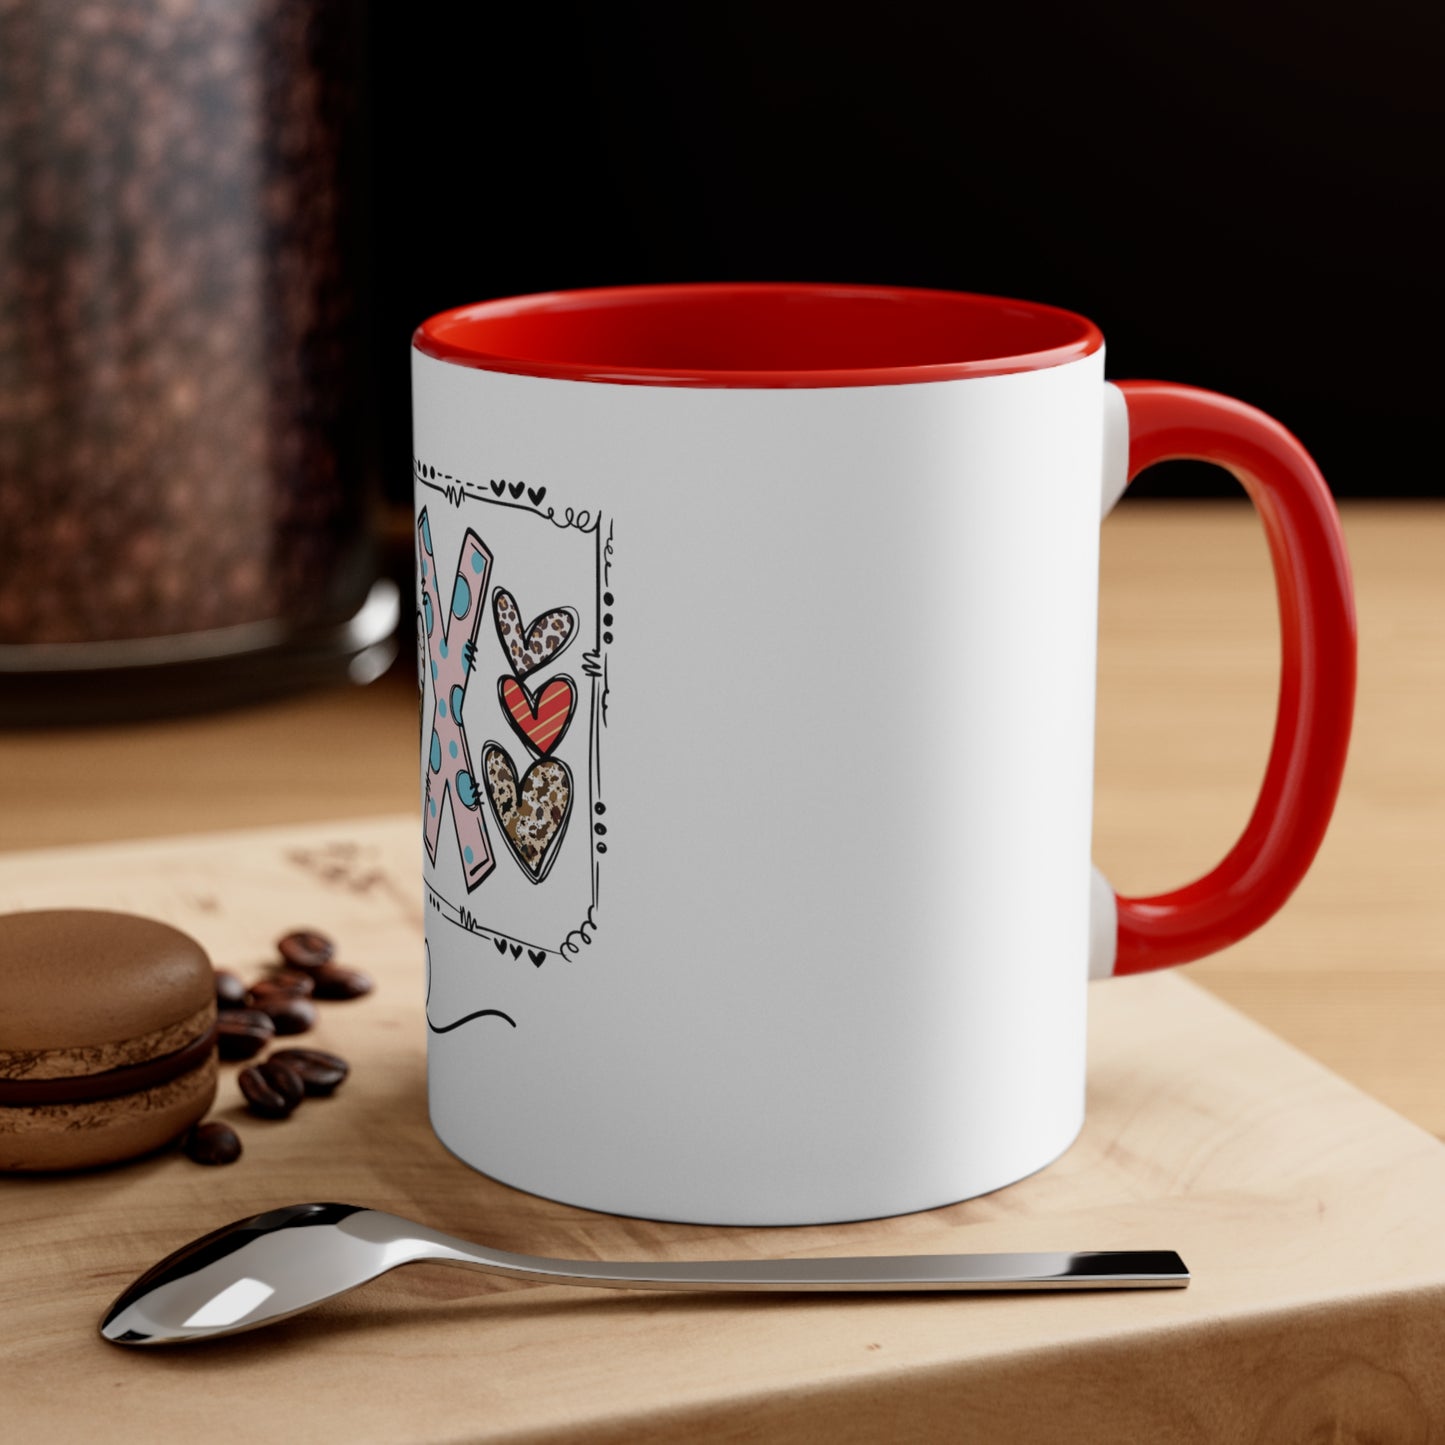 Sign of Love. XOXO. Accent Coffee Mug, 11oz